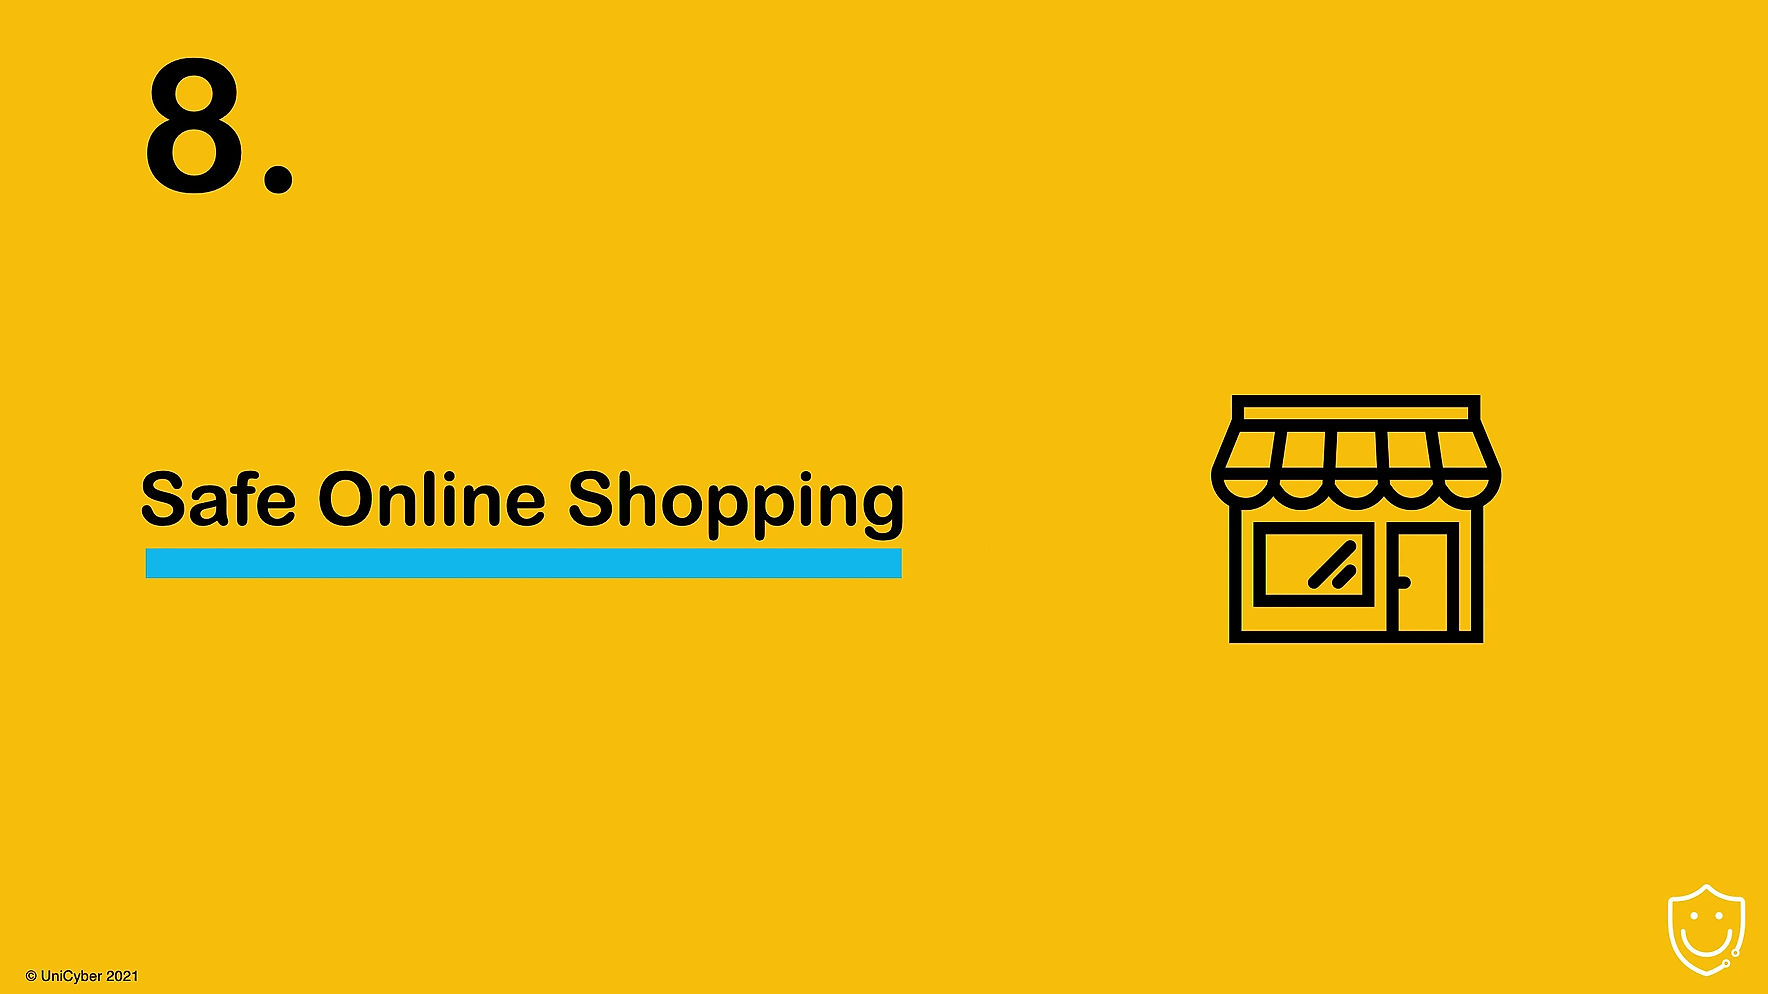 08. Safe Online Shopping